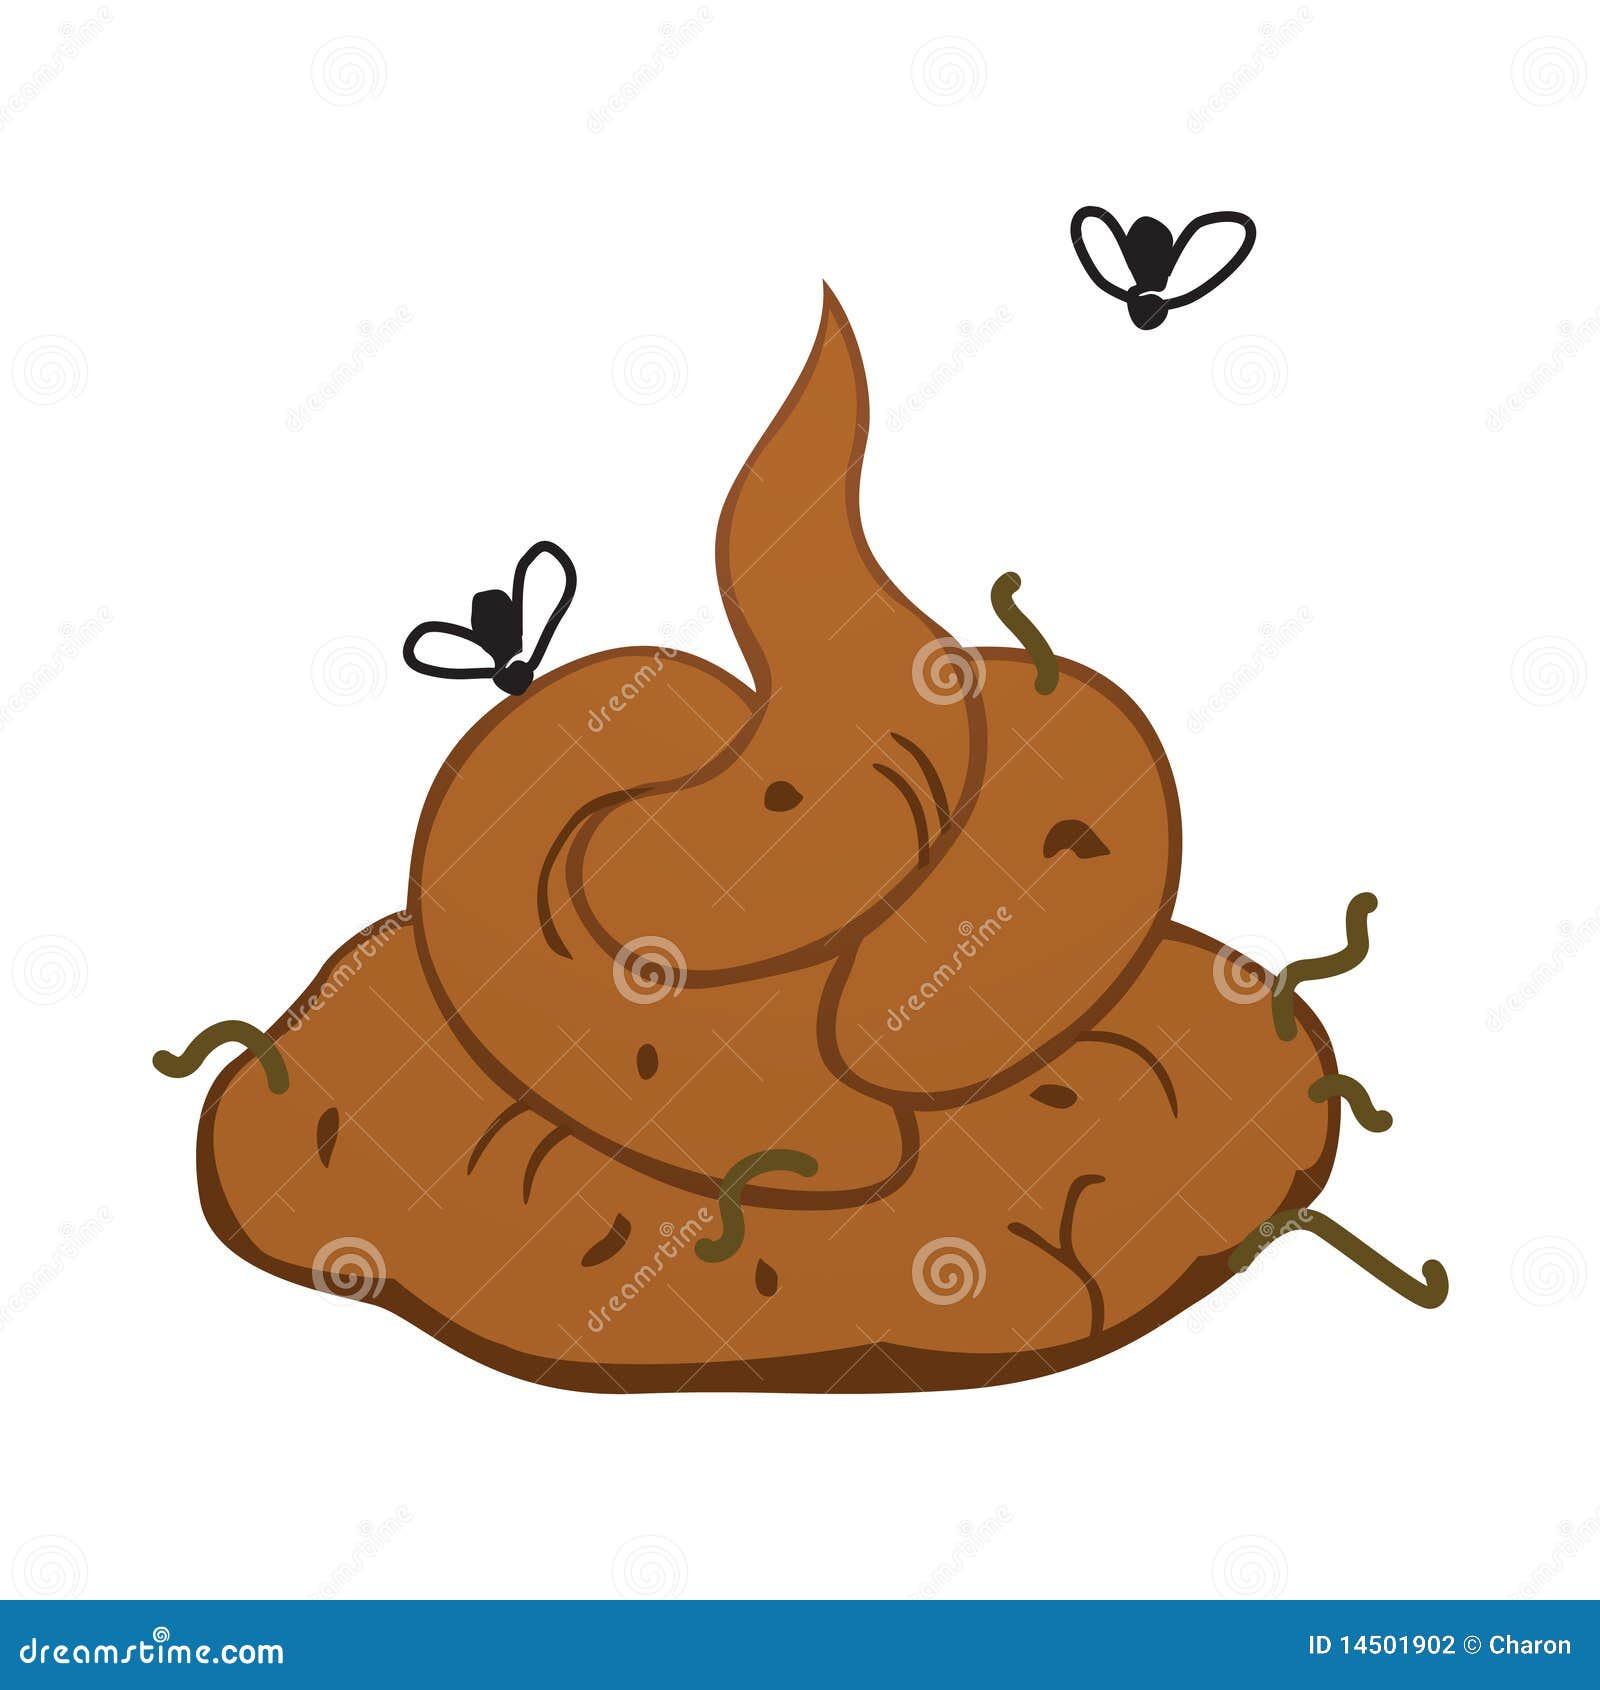 shit-poop-cartoon-illustration-14501902.